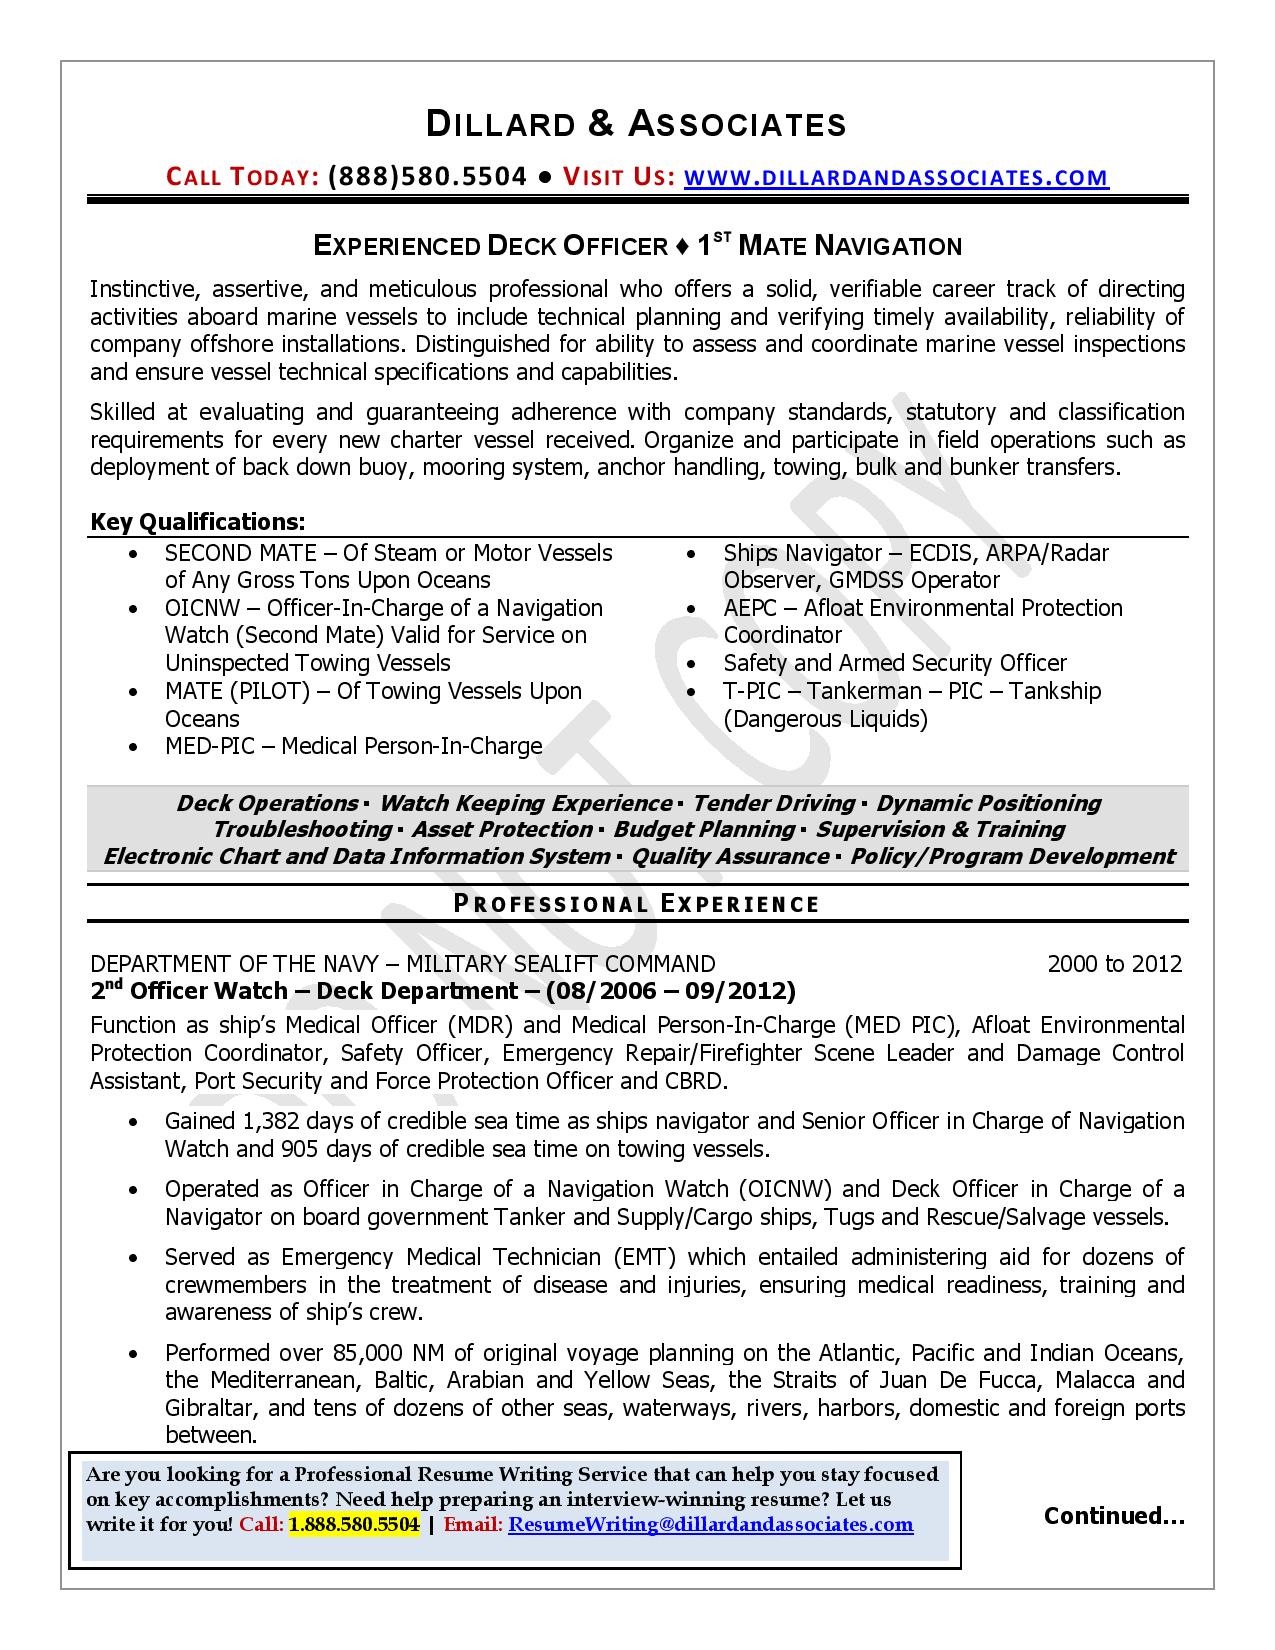 Professional Resume Writers Deck Officer Maritime Resume Sample Page 001 professional resume writers|wikiresume.com